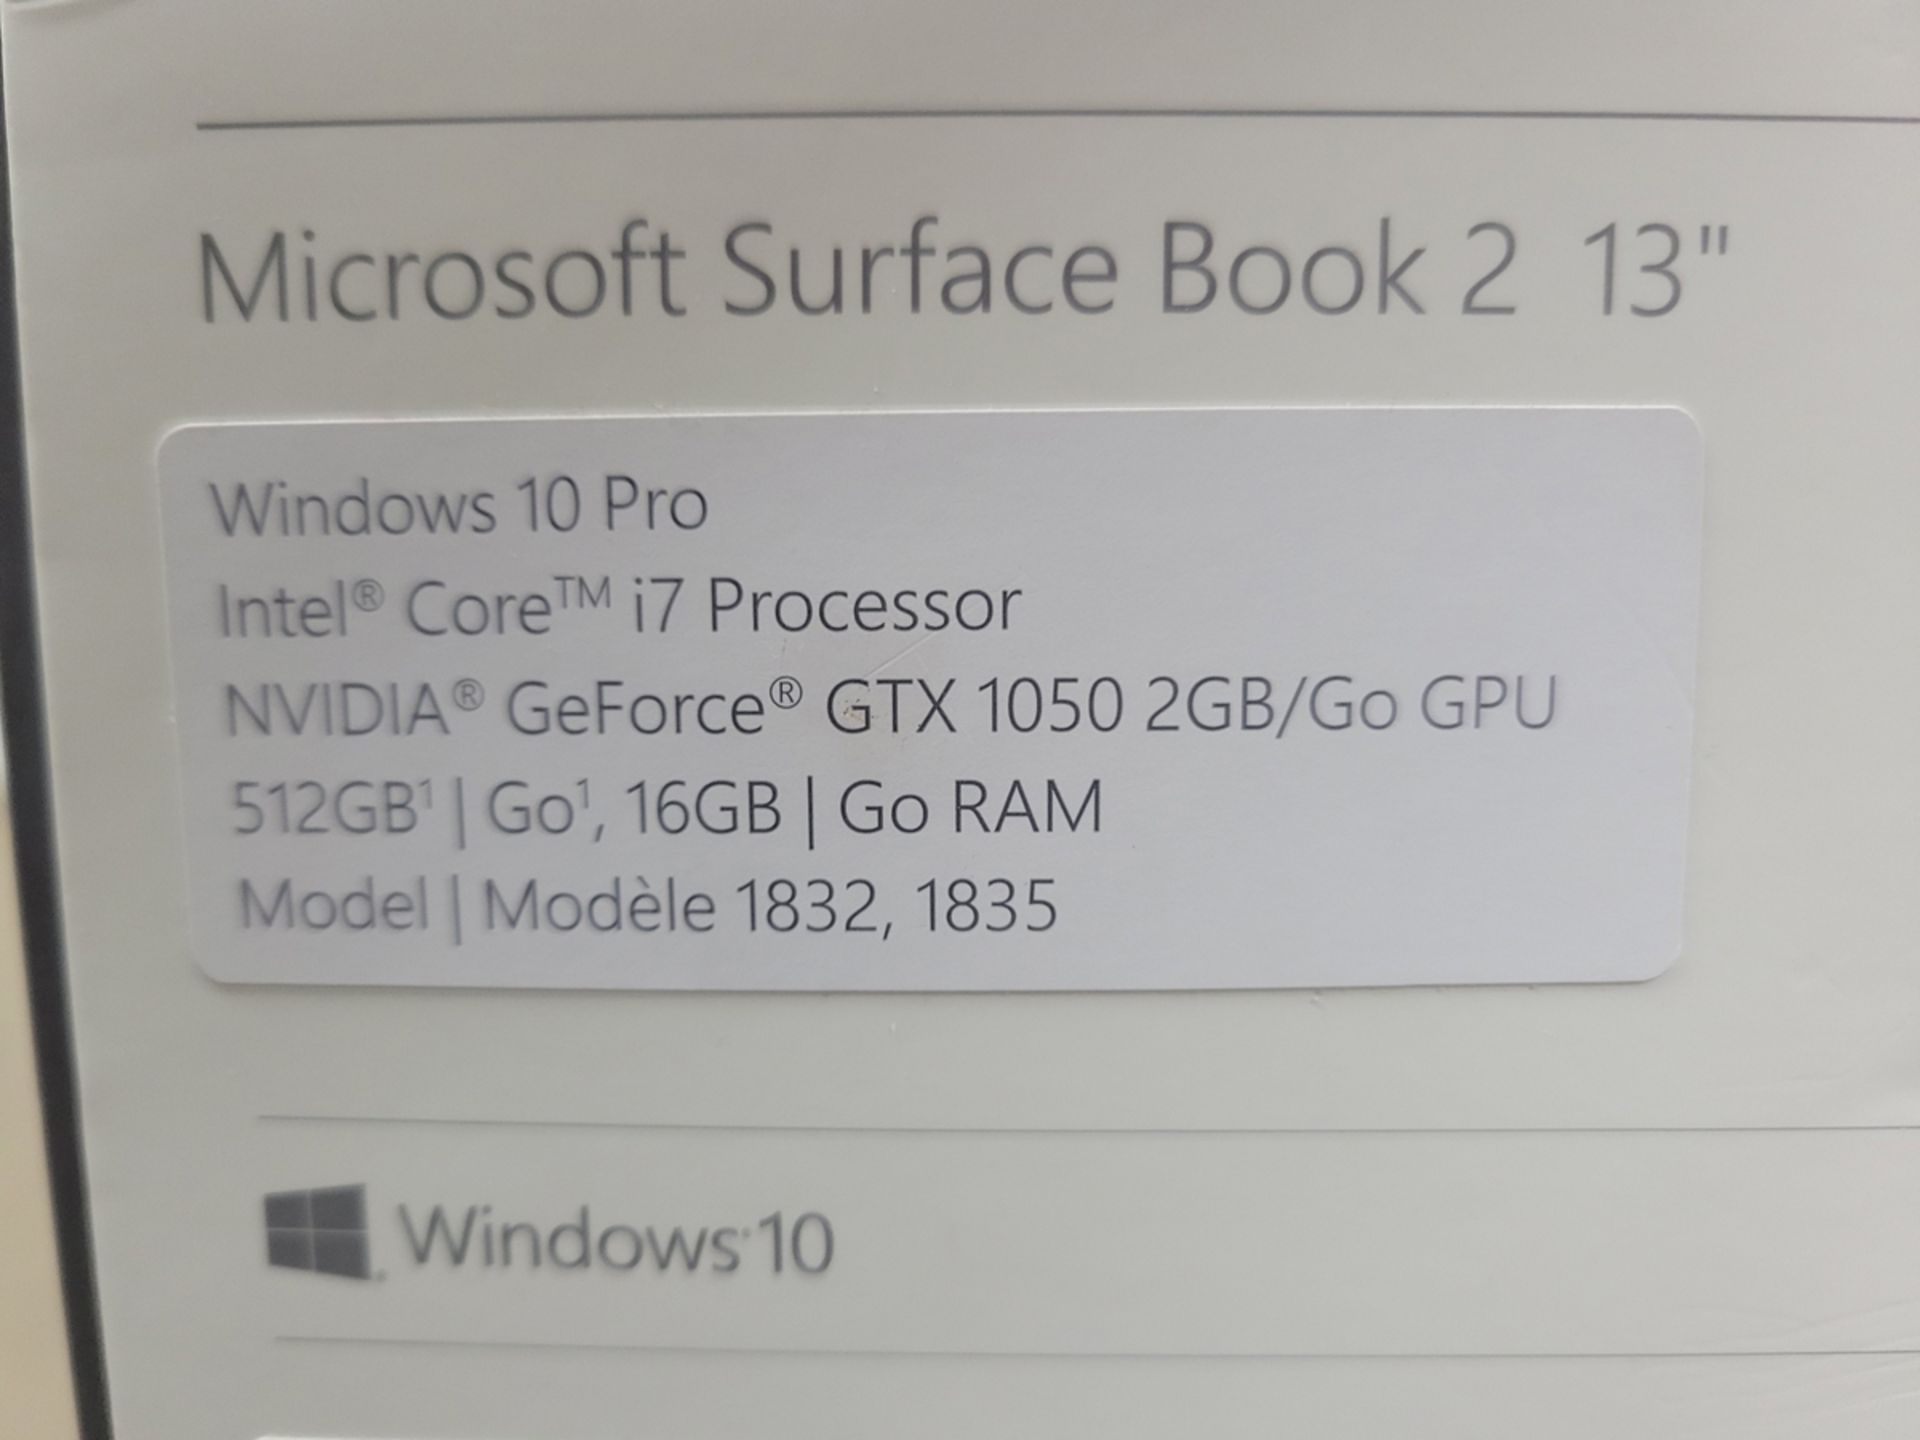 Microsoft Surface Book 2 13" w/ Intel Core i7 Processor - Image 7 of 8